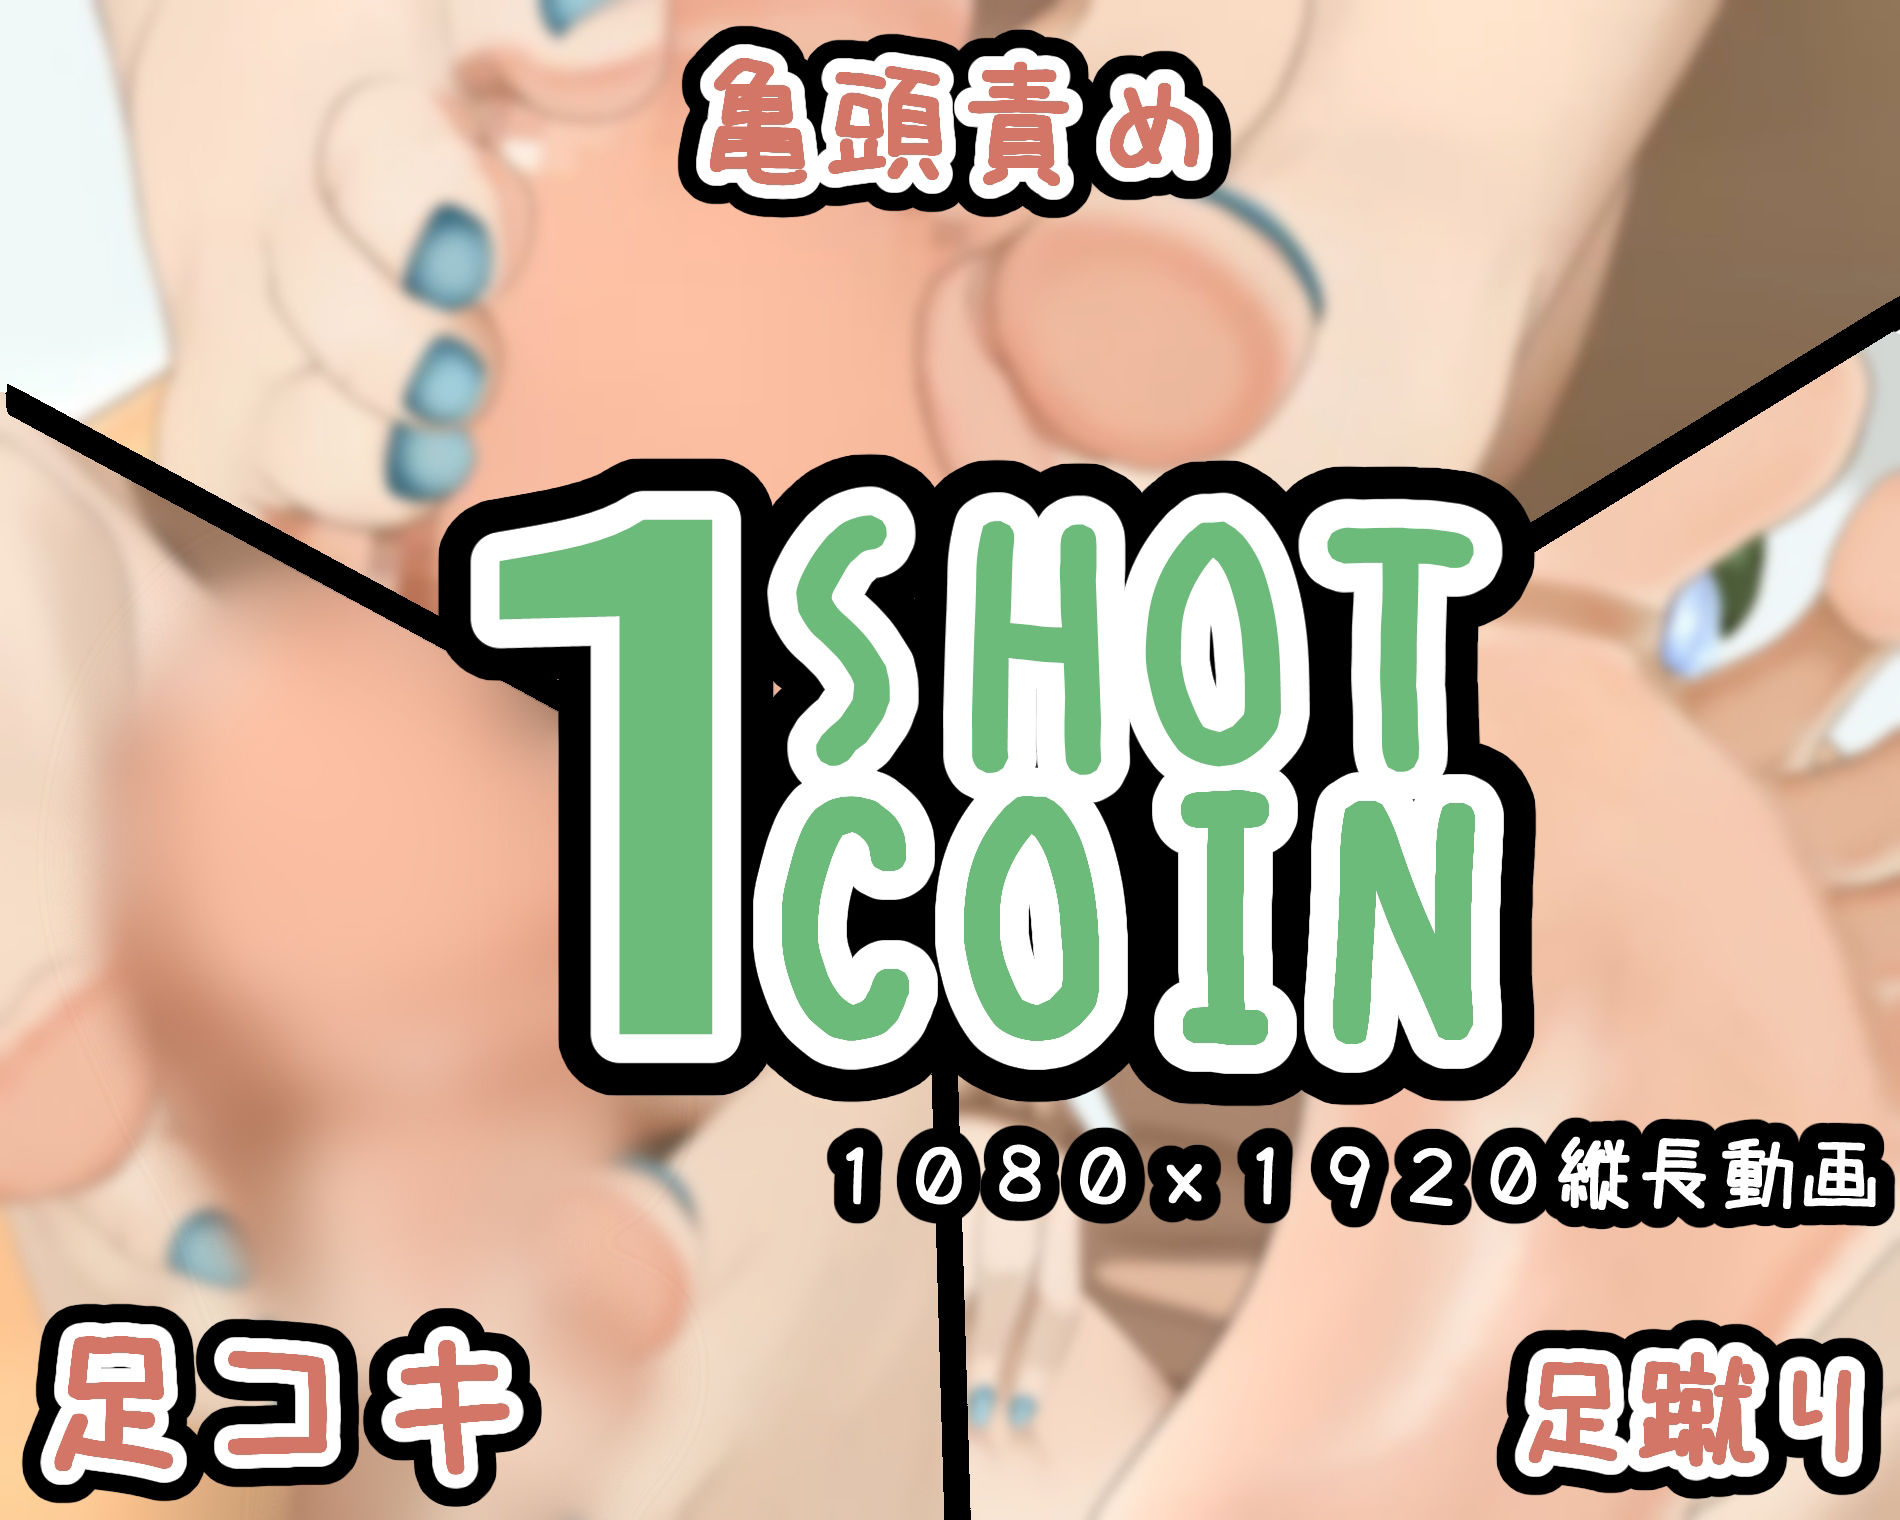 1SHOT 1COIN〜Vol.6〜足フェチの裸足フェチによる足フェチ向けの動画1